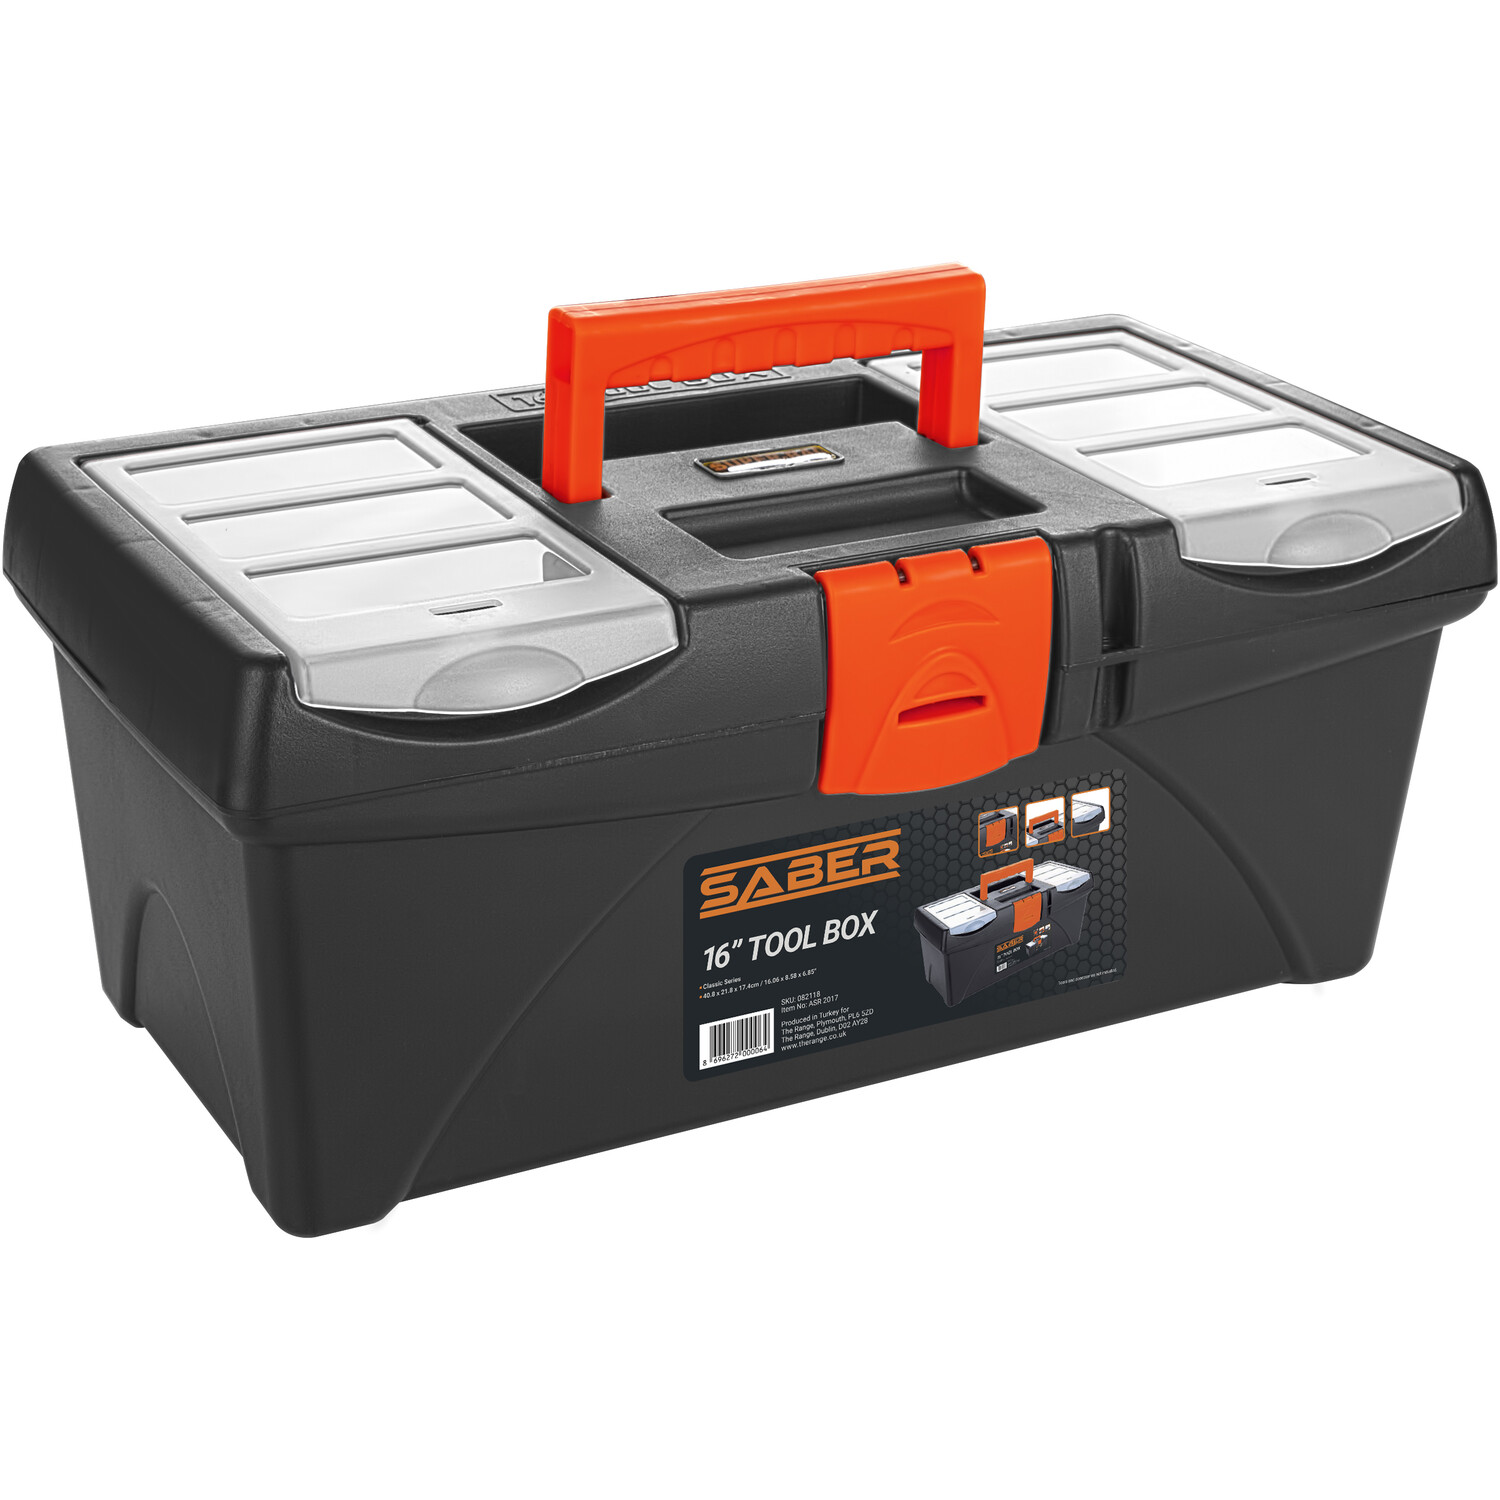 Saber Black and Orange Tool Box 40.8cm Image